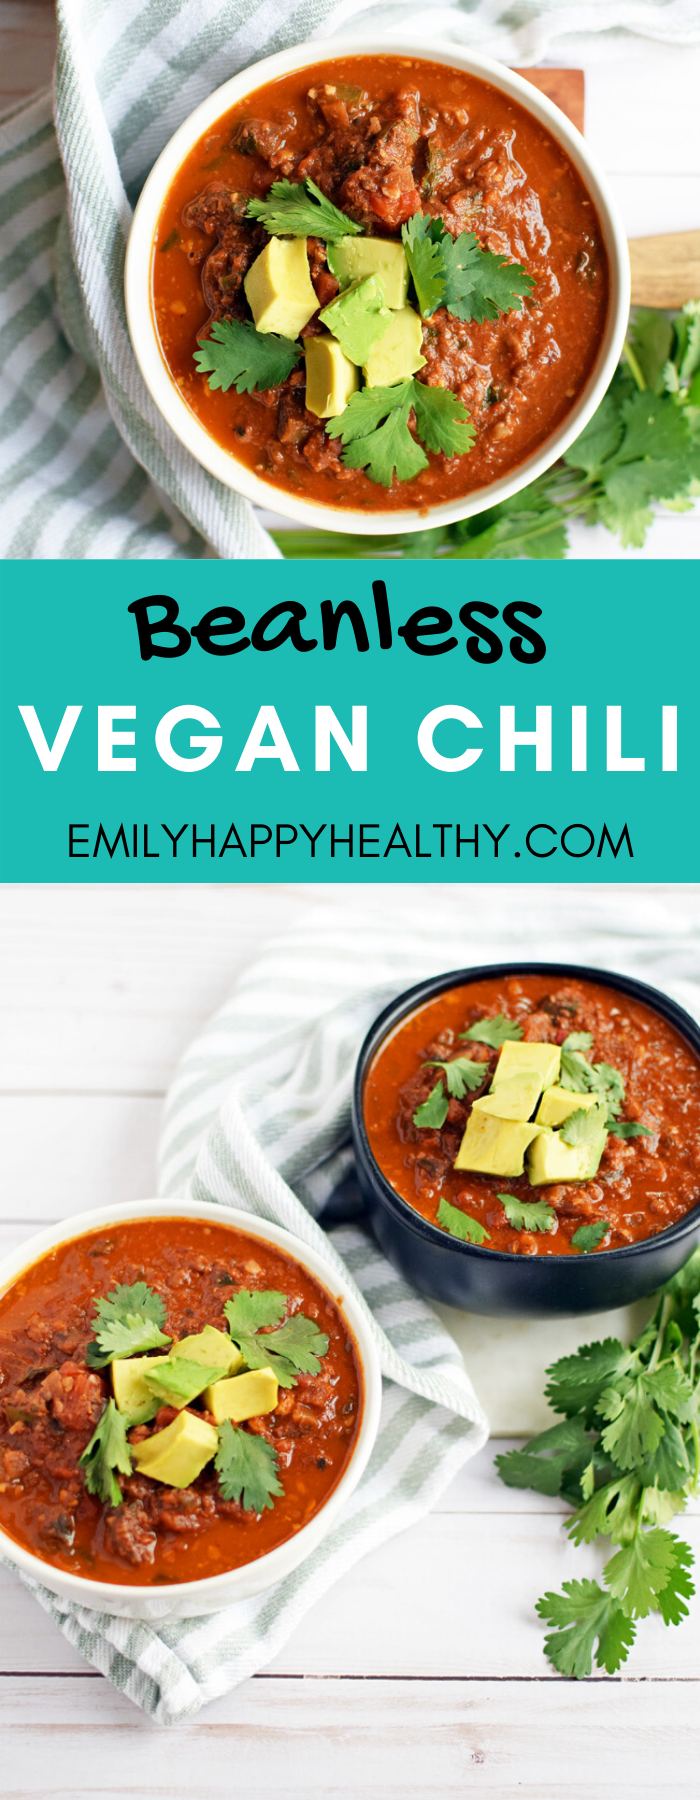 Healthy Vegan Beanless Chili Recipe - Emily Happy Healthy